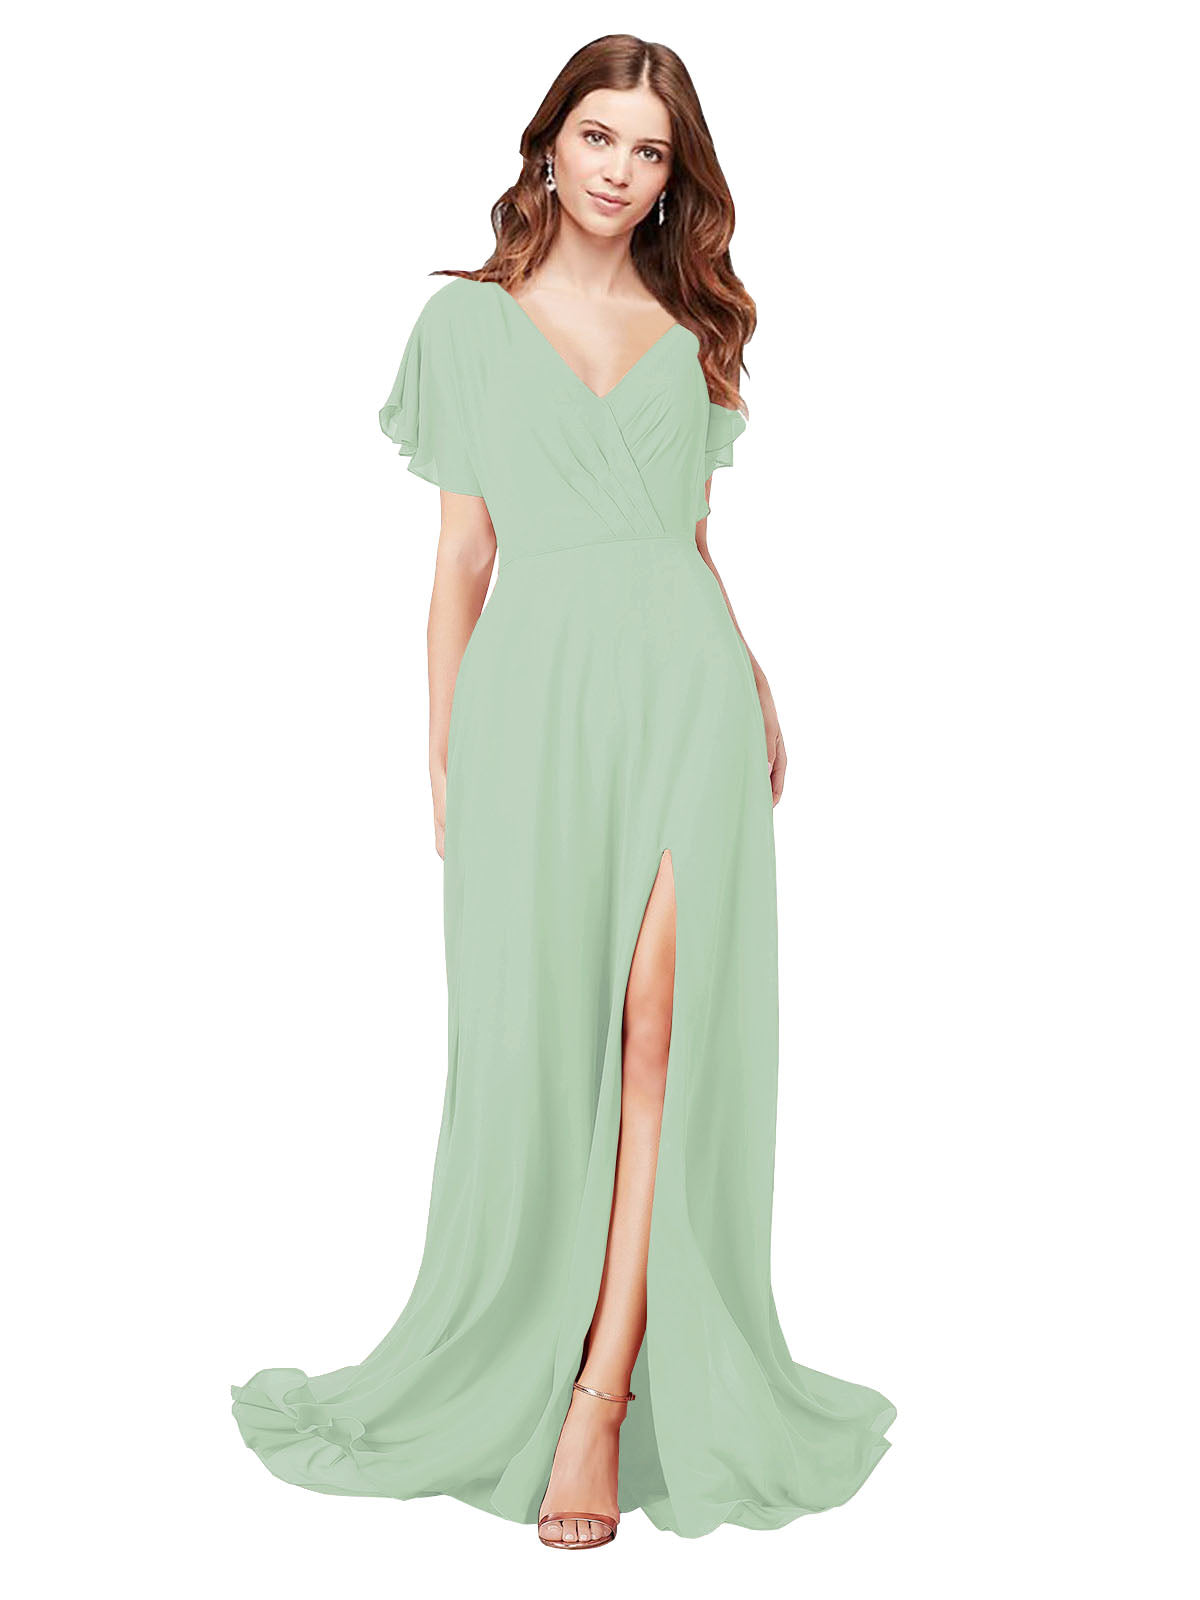 RightBrides Marisol Sage A-Line V-Neck Cap Sleeves Long Bridesmaid Dress